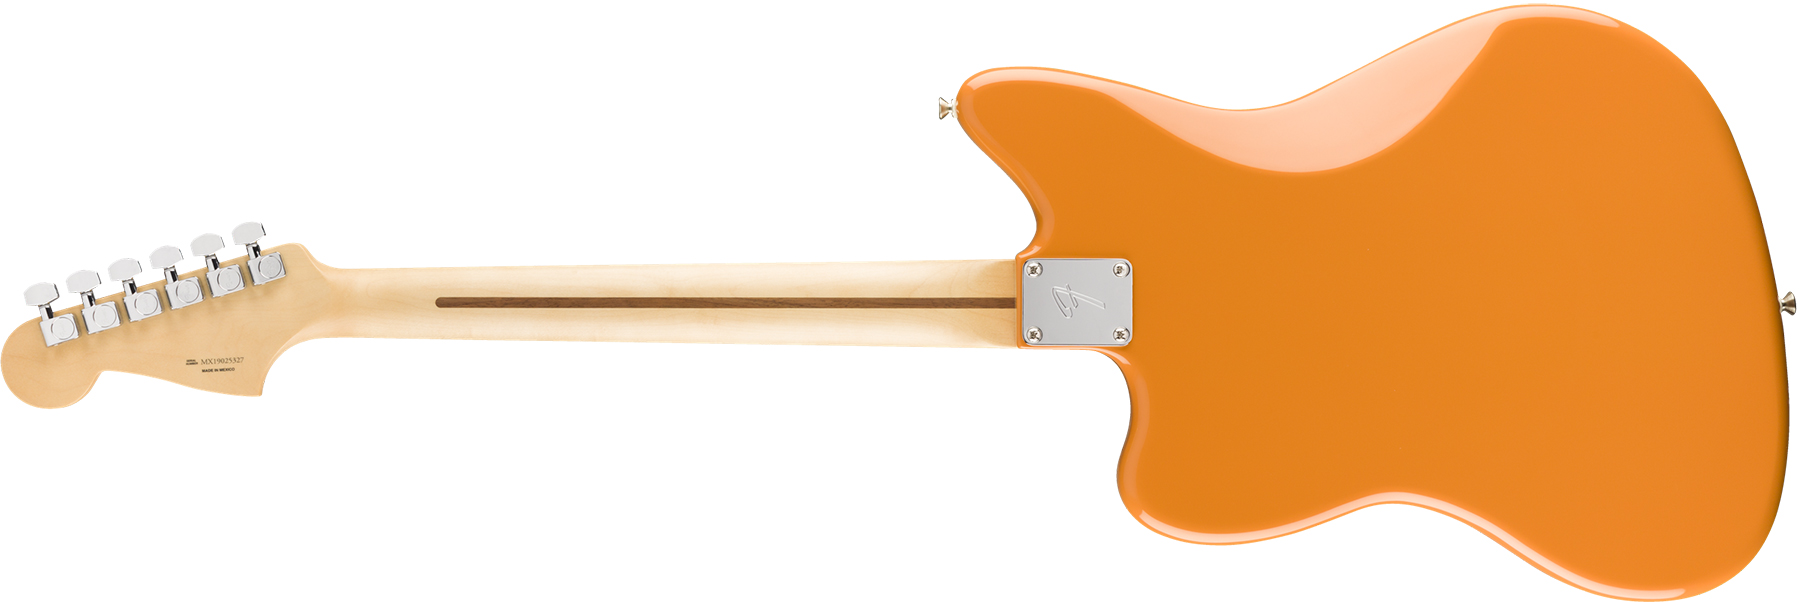 Fender Jazzmaster Player Mex Hh Pf - Capri Orange - Guitarra electrica retro rock - Variation 1